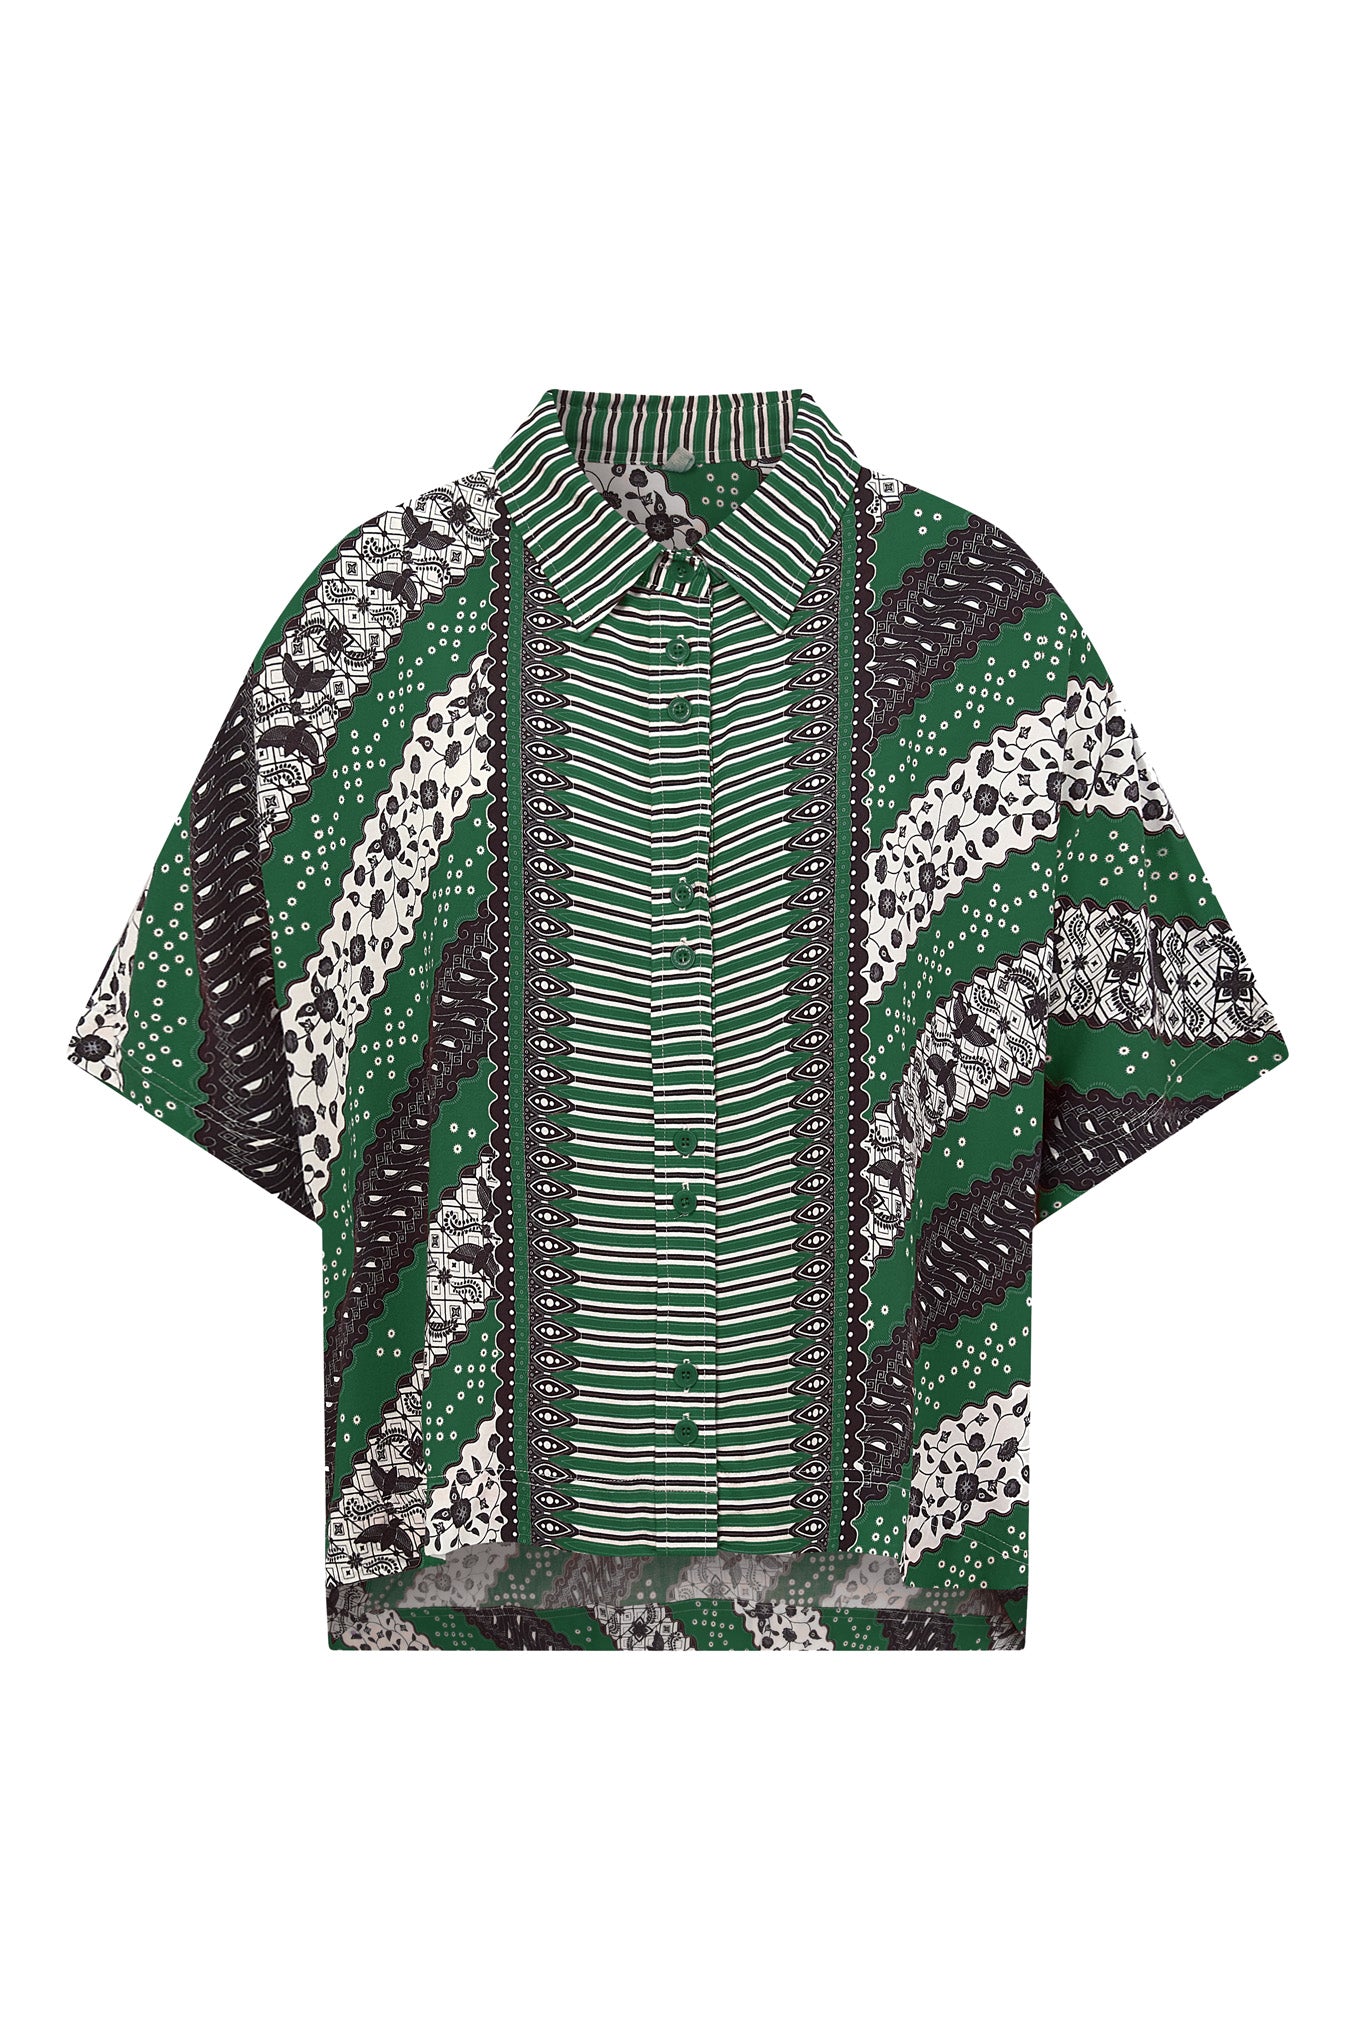 KIMONO Shirt - Summer Green, Size 2/ UK 10/ EUR 38